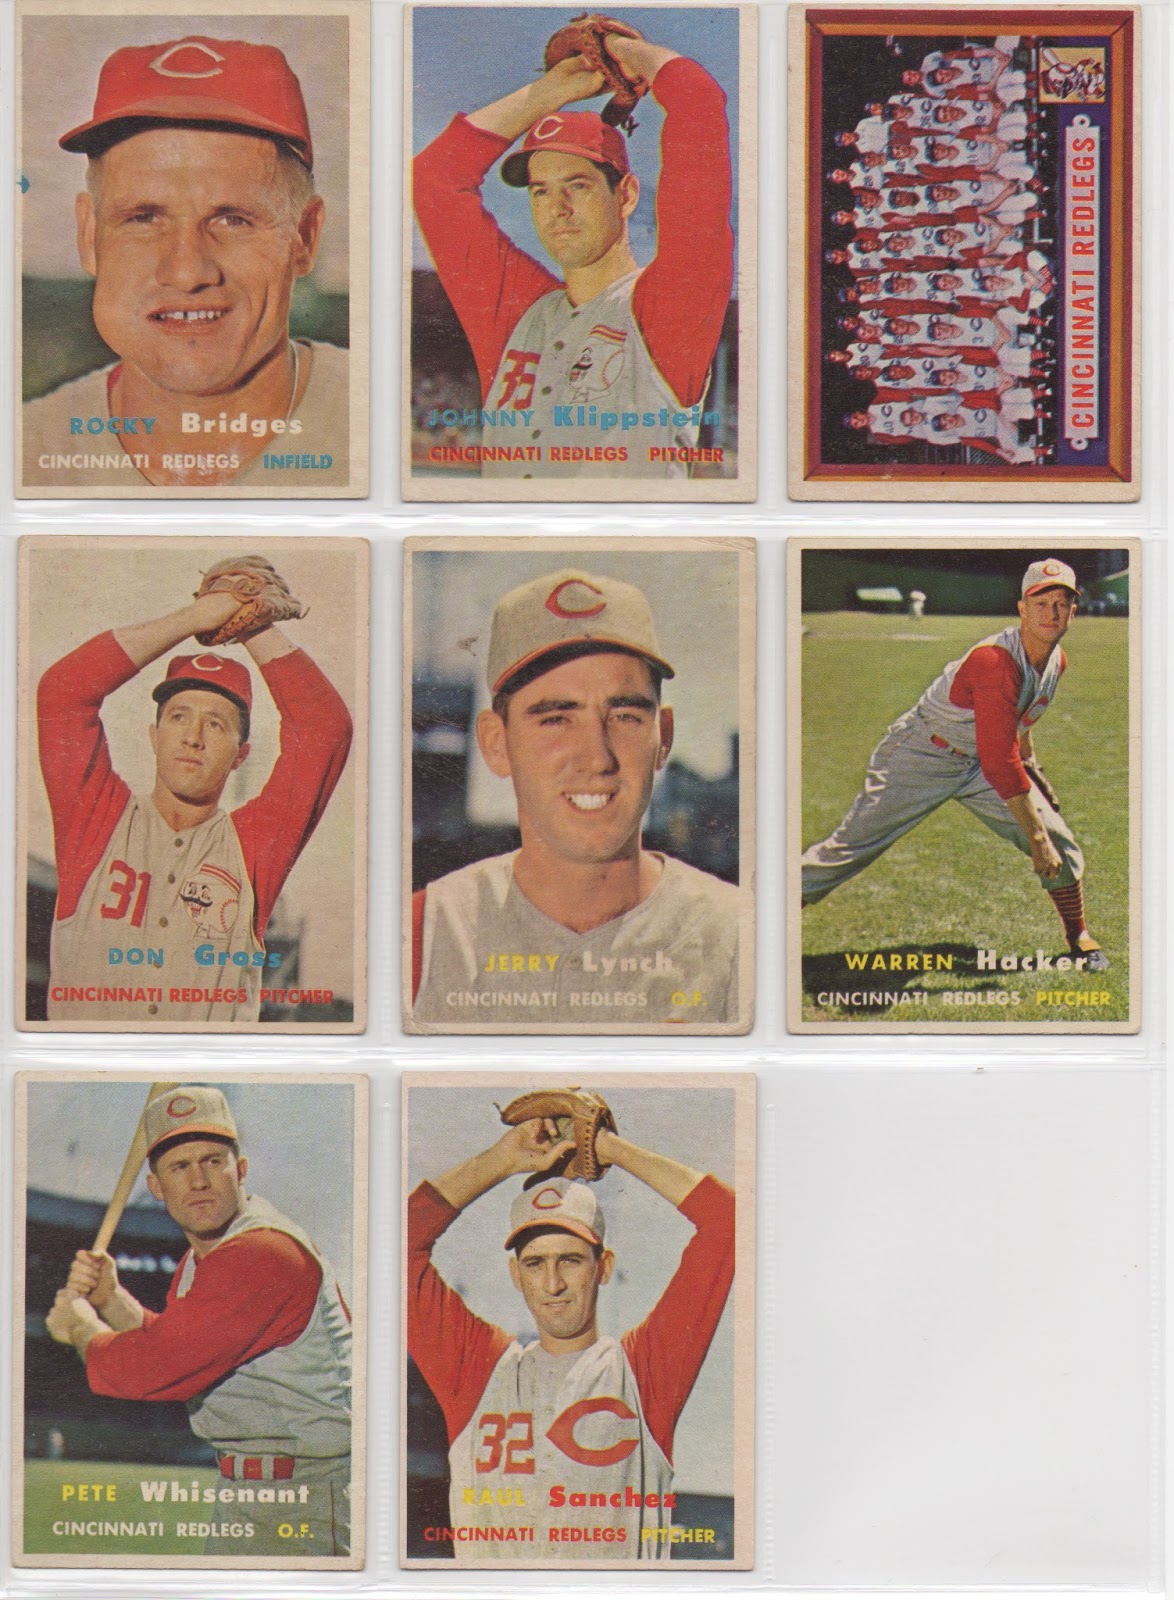 Cincinnati Reds Baseball Card Collector: 1957 Topps Cincinnati Reds Team Set